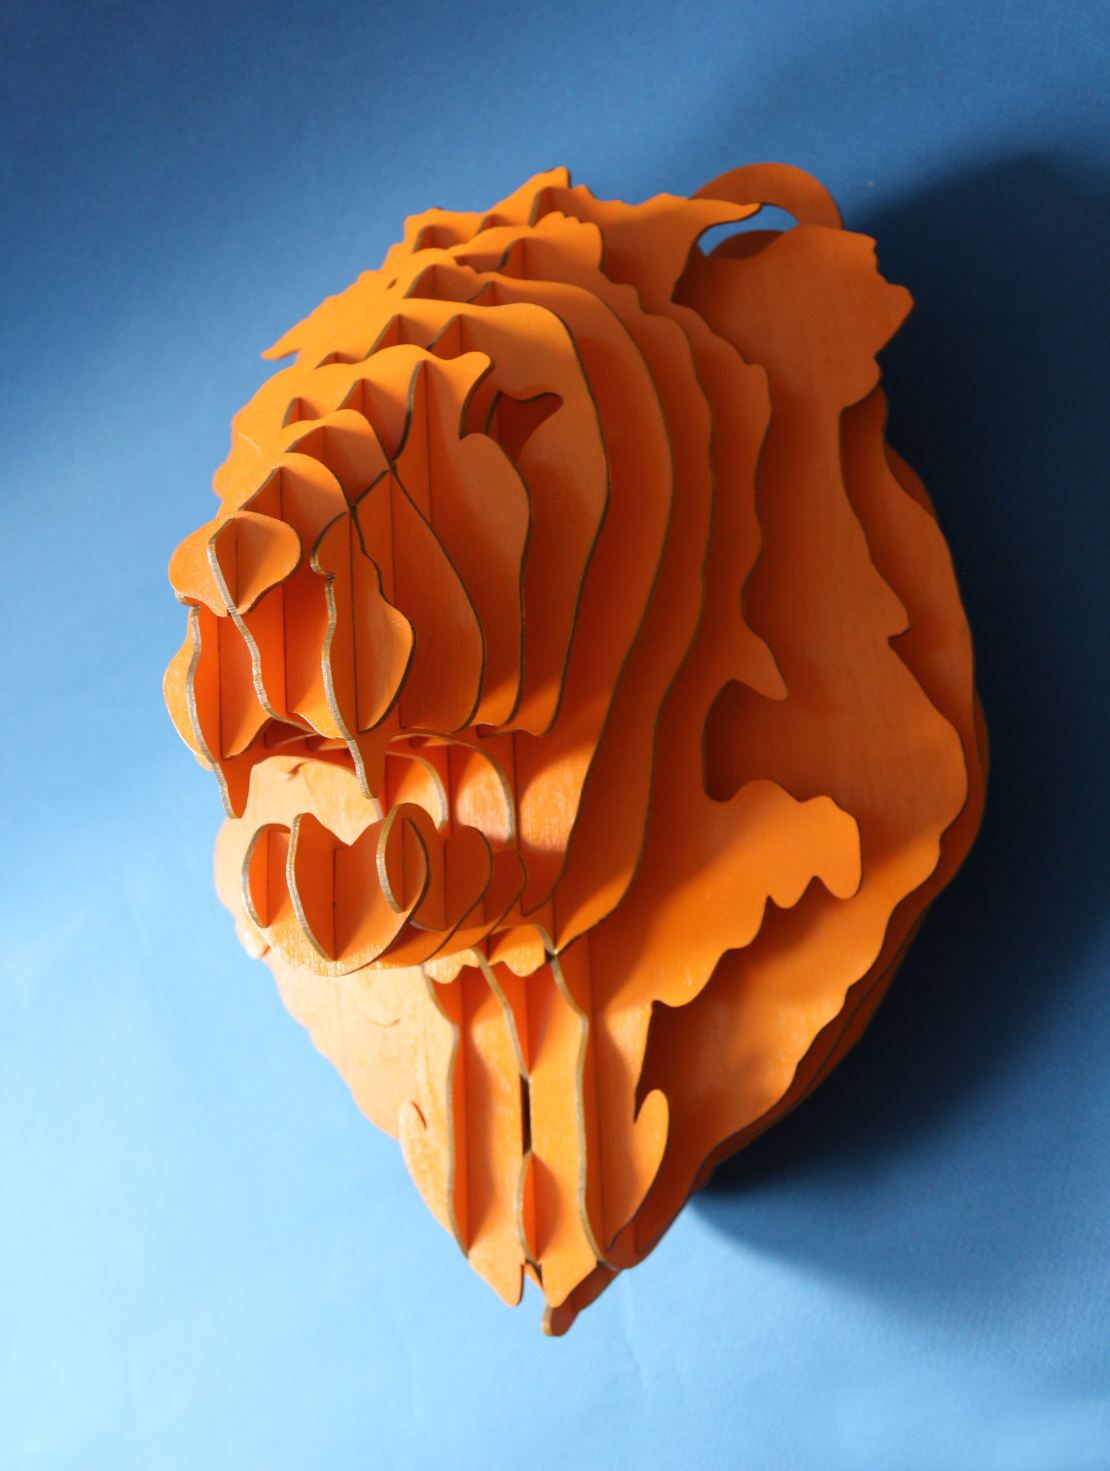 Голова льва